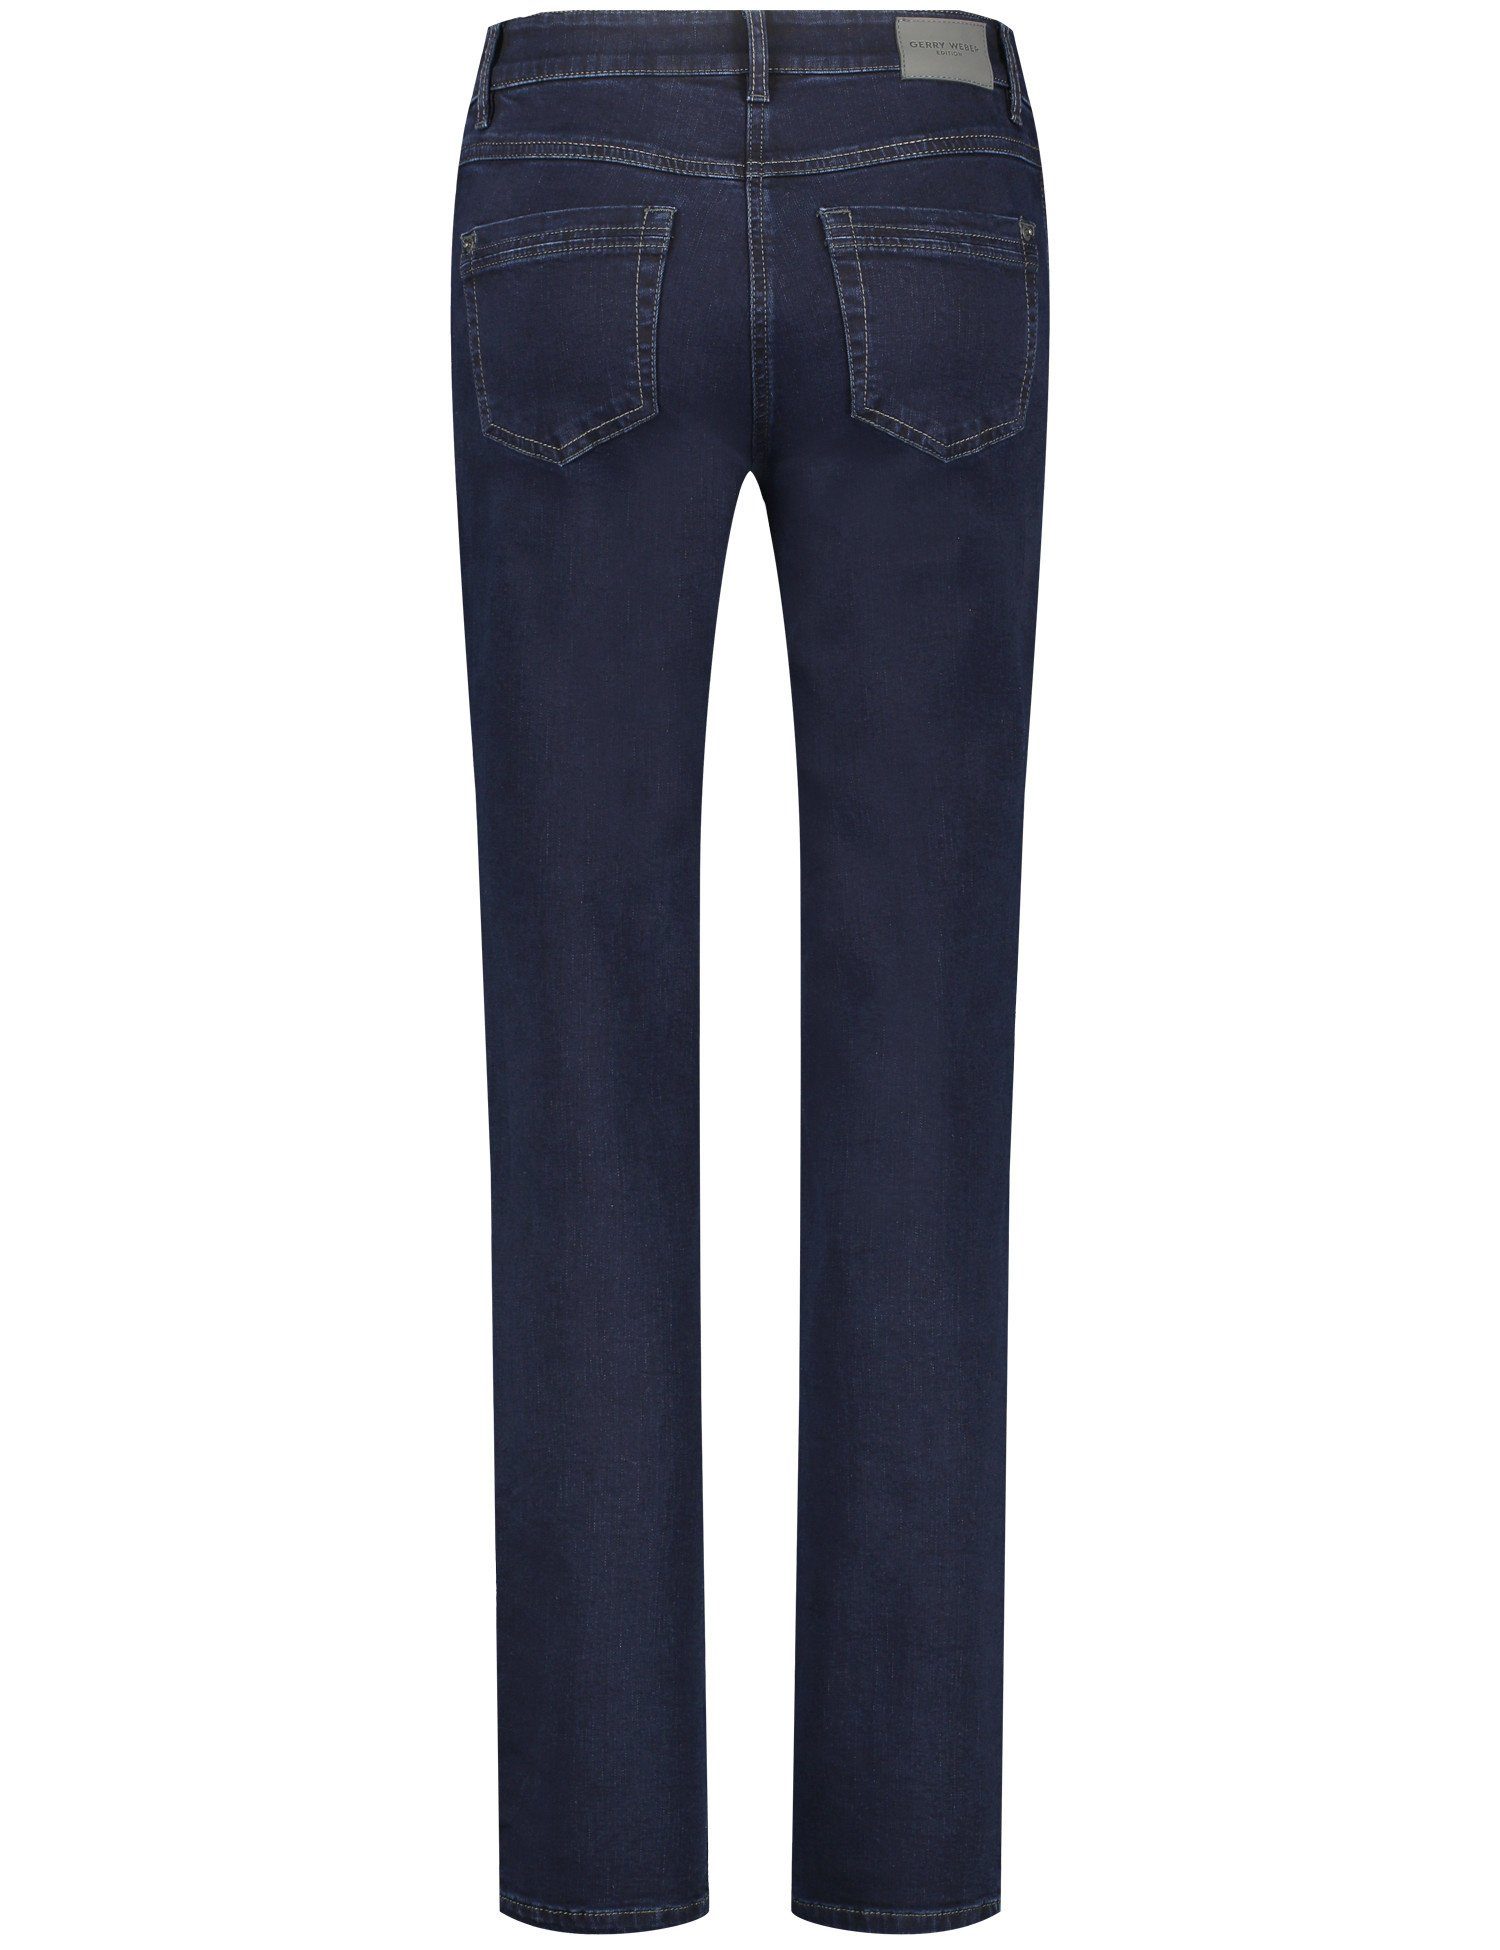 Dark Blue GERRY WEBER Straight 5-Pocket Fit Jeans Stretch-Jeans Denim